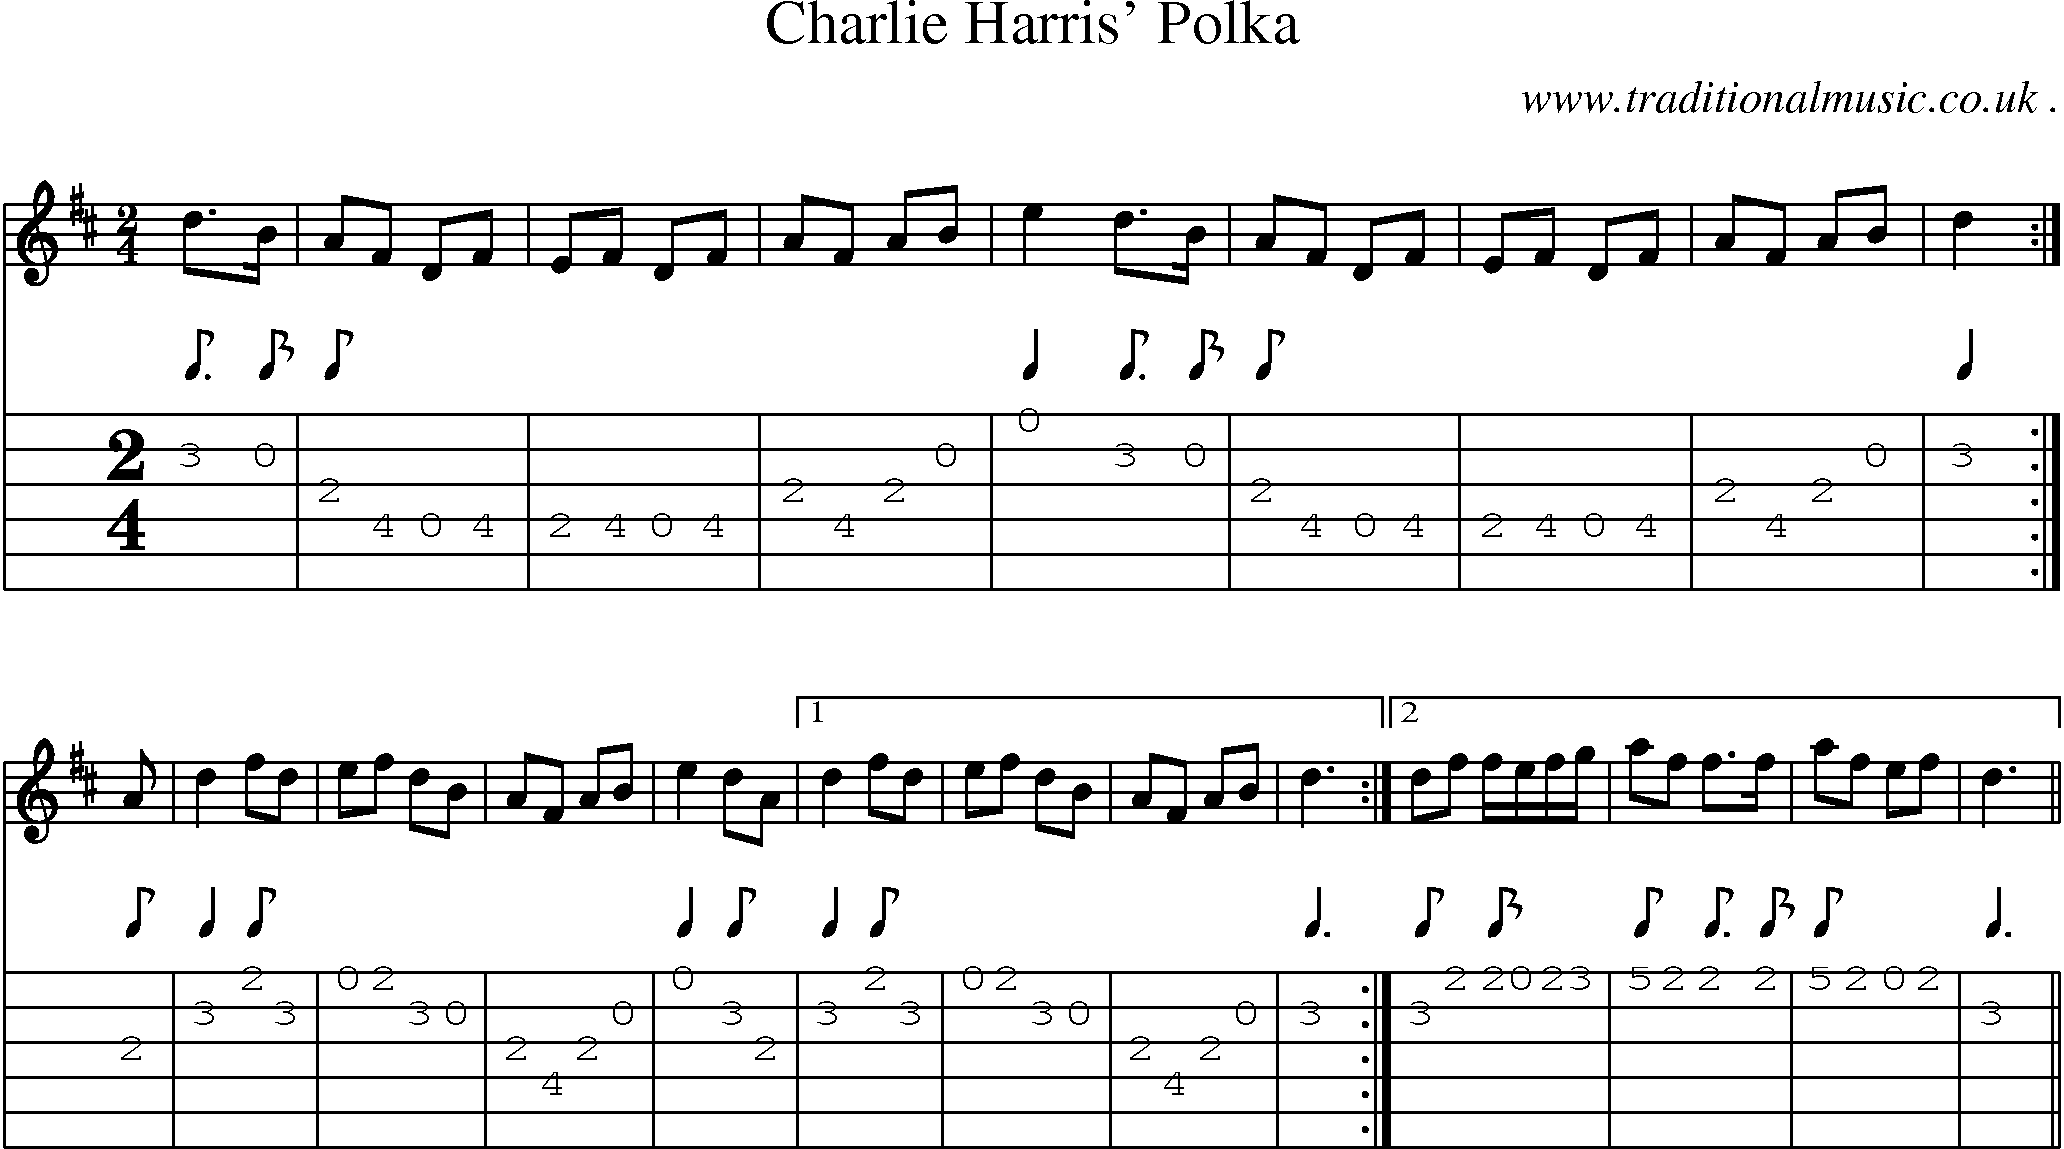 Sheet-Music and Guitar Tabs for Charlie Harris Polka